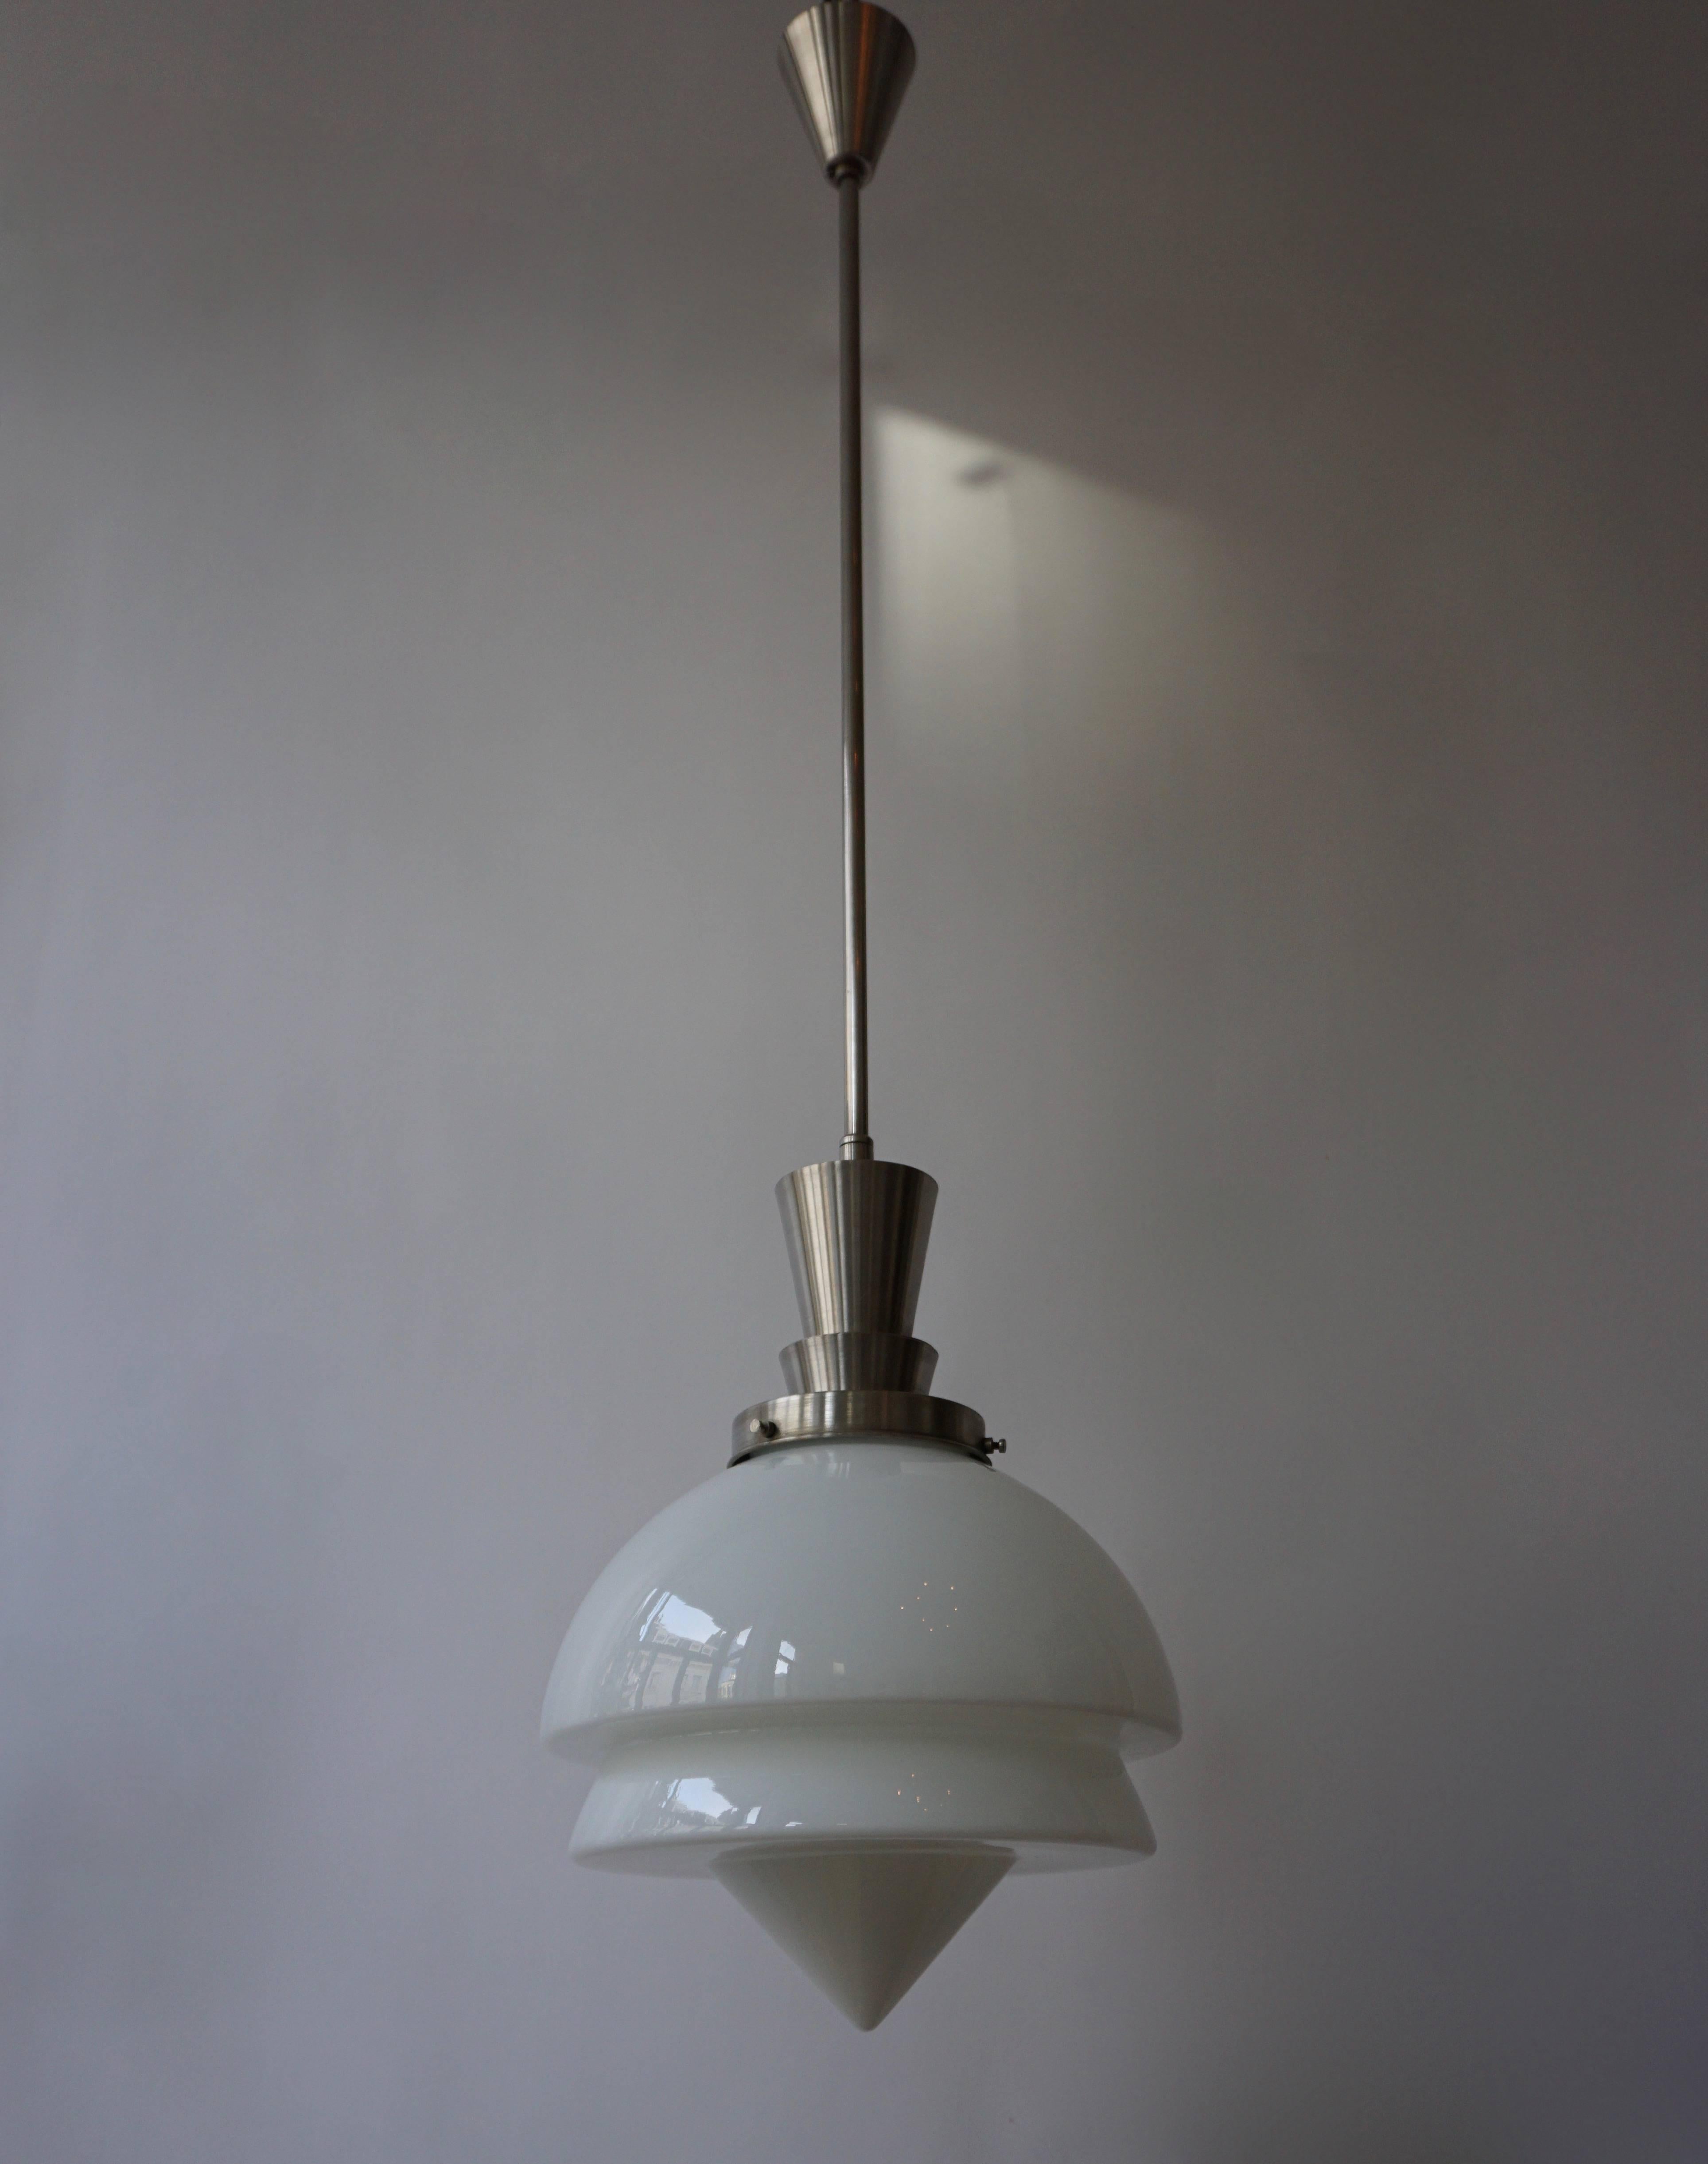 Opaline glass pendant light by Gispen, Holland.